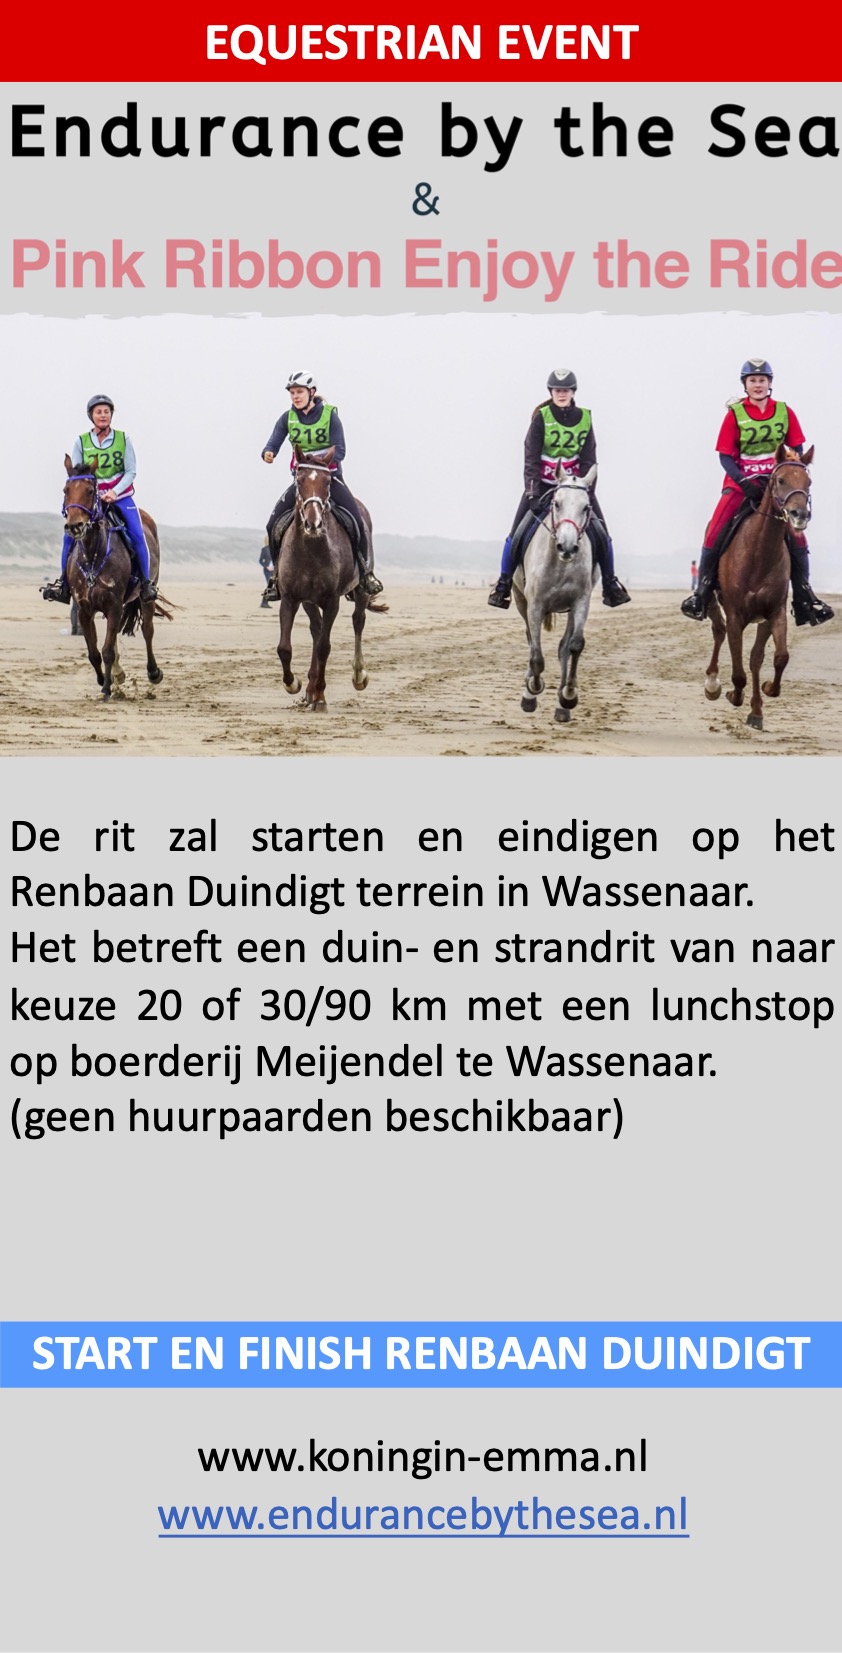 Paardensportvereniging Koningin Emma Wassenaar en Endurance by the Sea